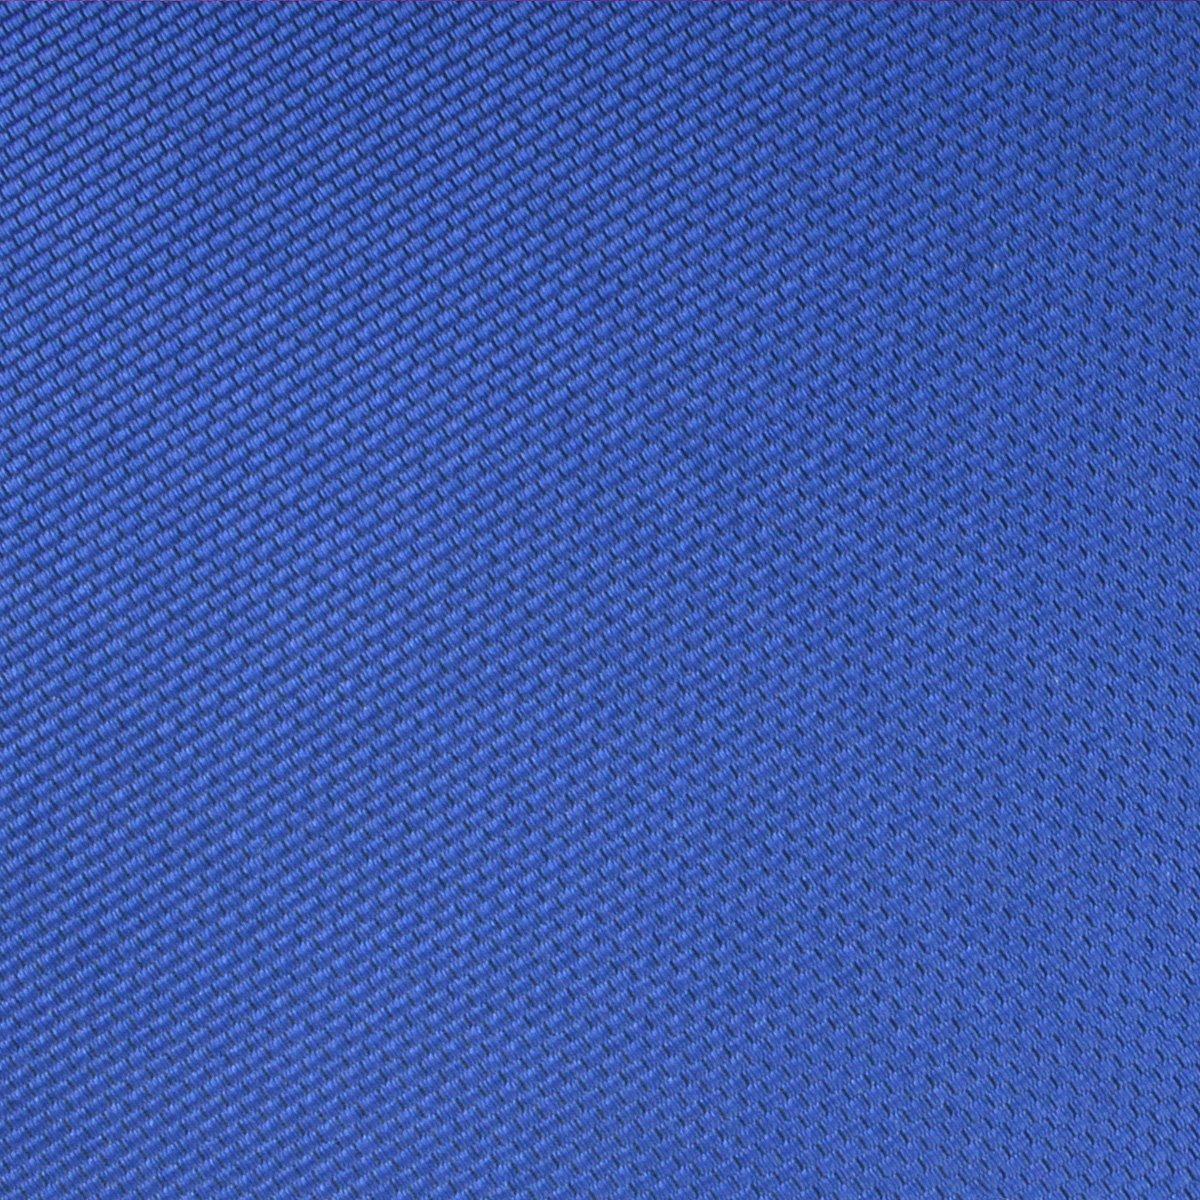 Horizon Blue Weave Skinny Tie Fabric